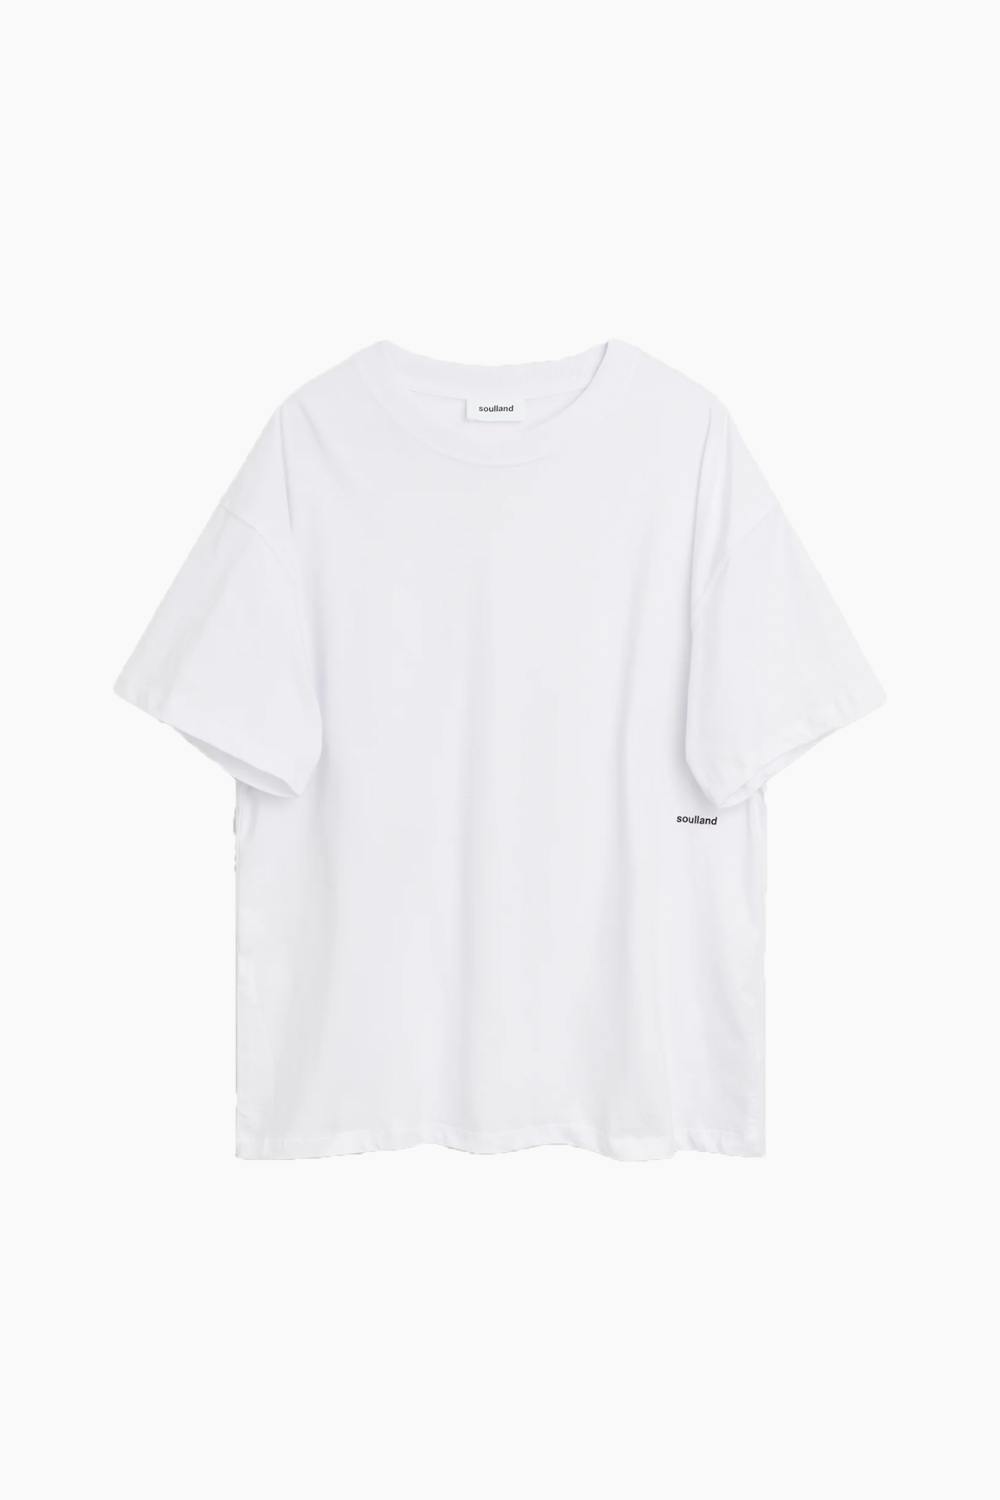 Se Ash T-shirt - White - Soulland - Hvid M/L hos QNTS.dk